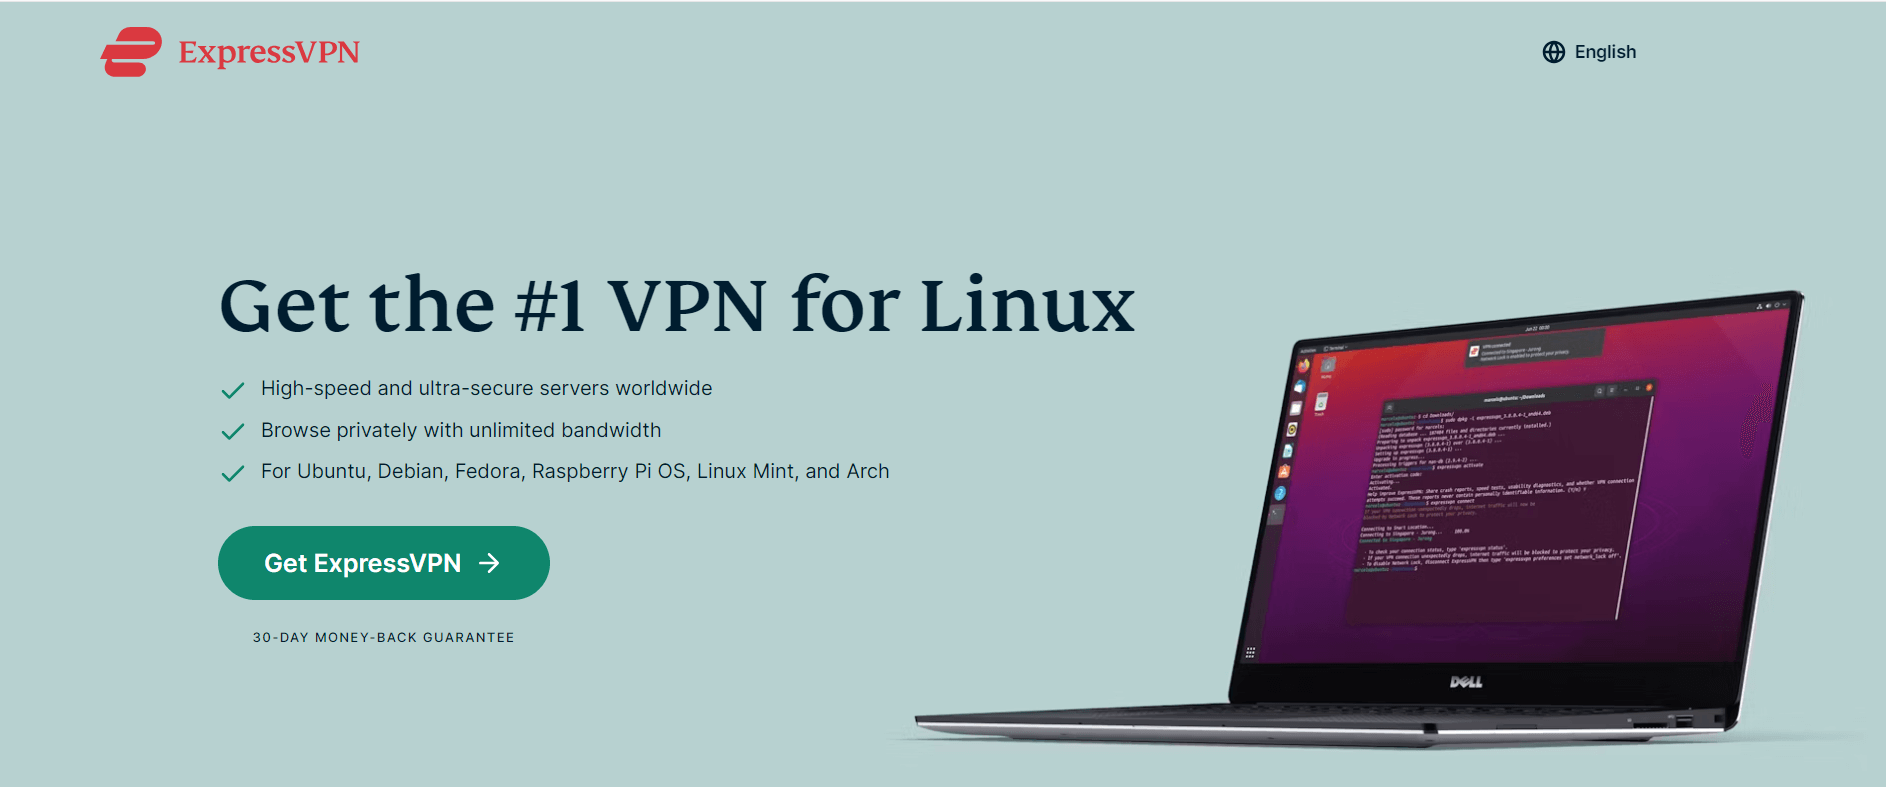 expressvpn-download-linux-in-India